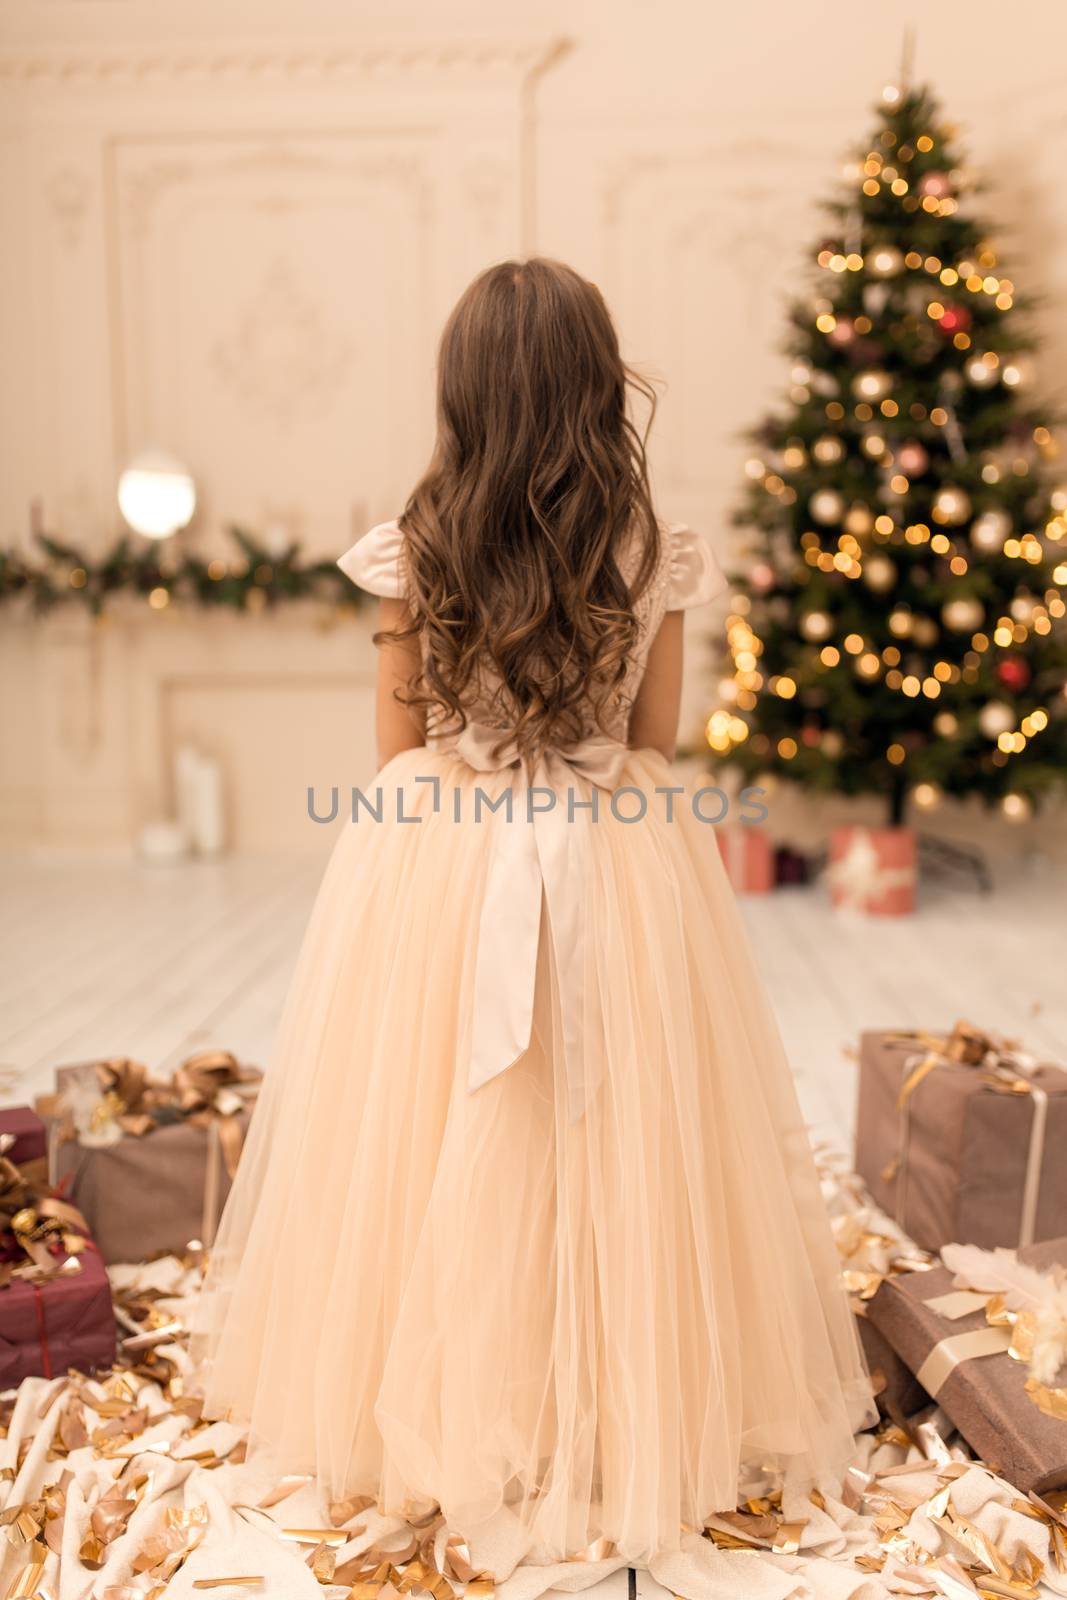 Beautiful little girl posing near the Christmas tree.